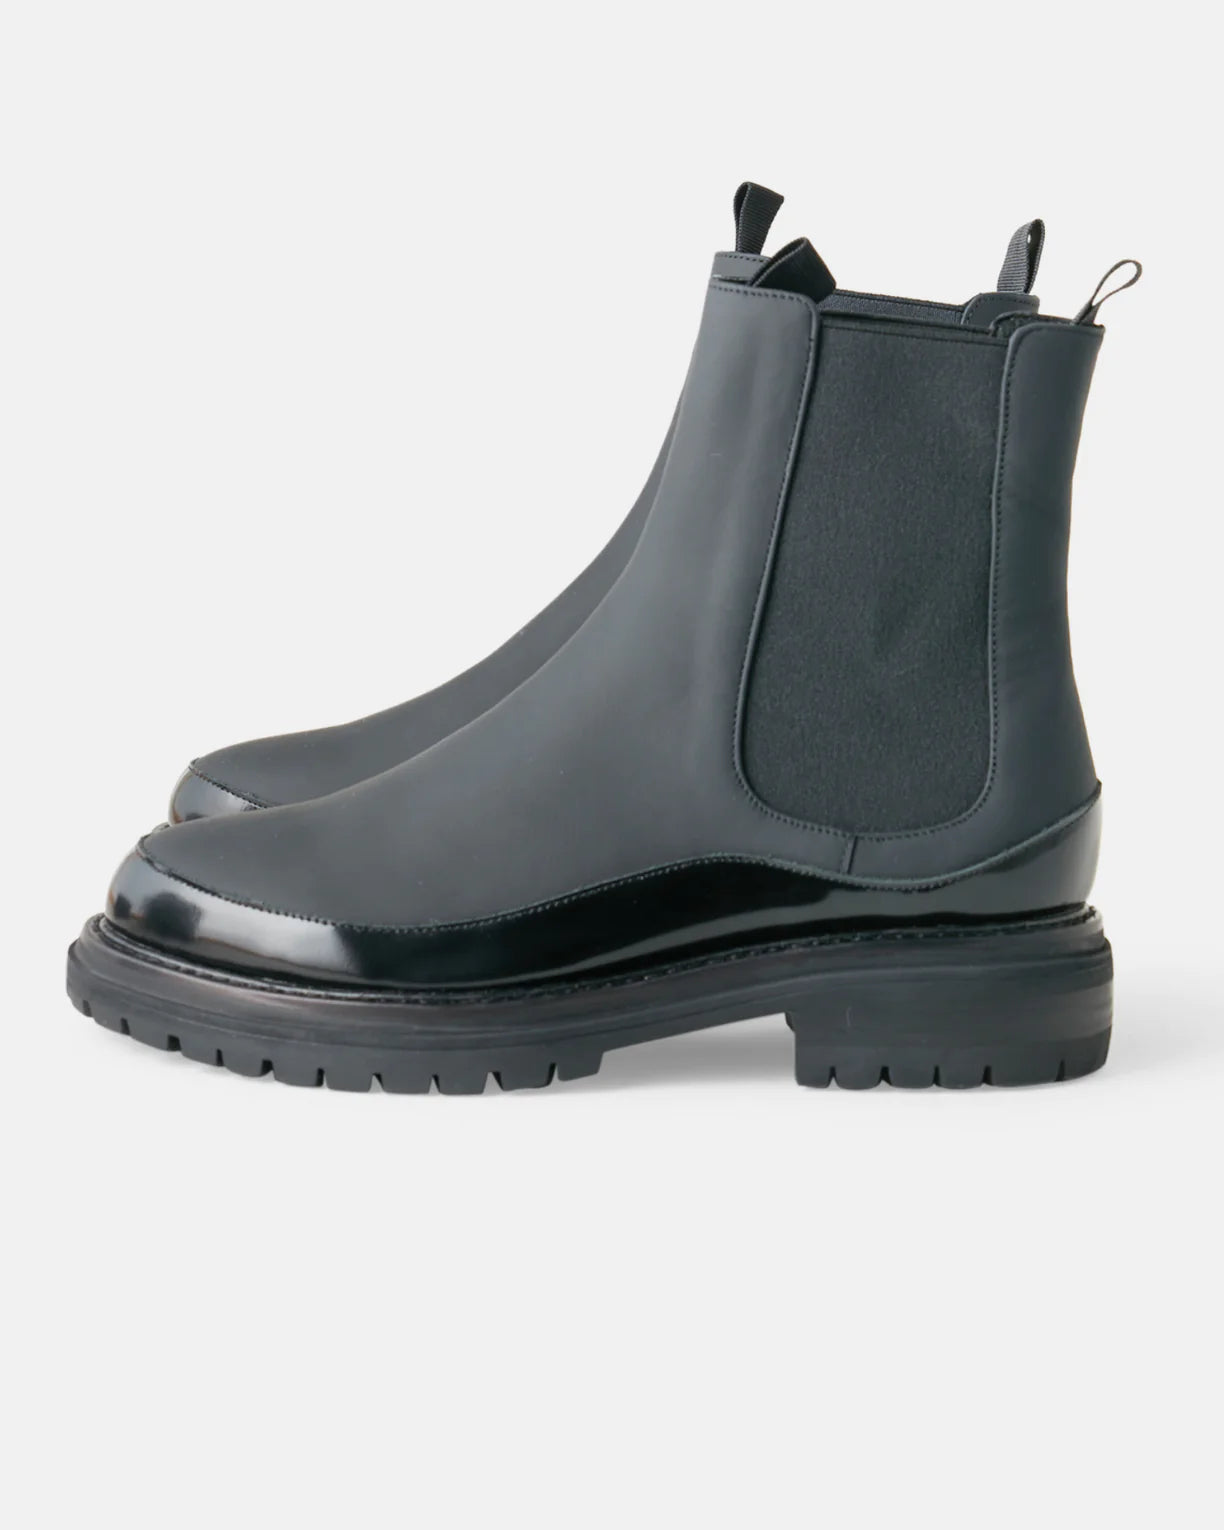 Otis Leather Boots - Black